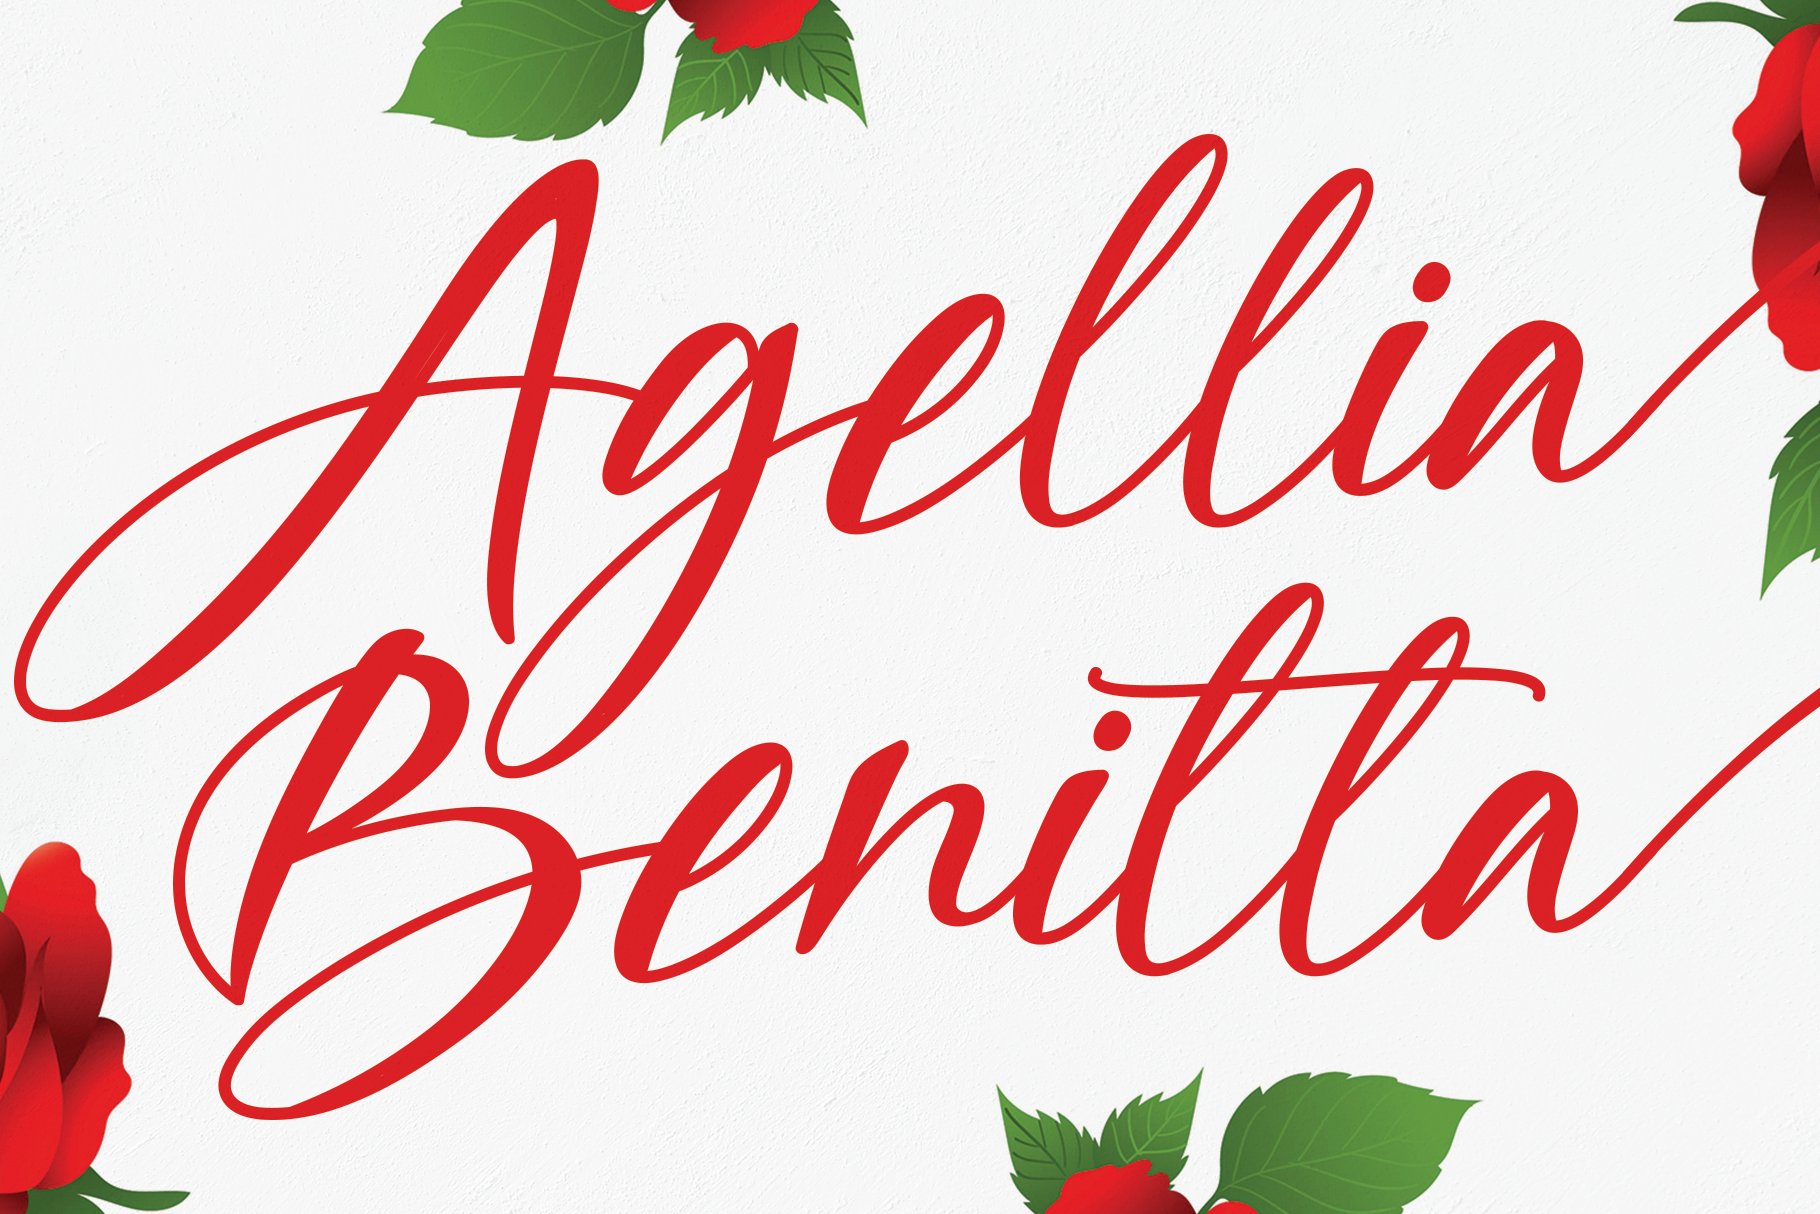 Agellia Benitta | handwritten font cover image.